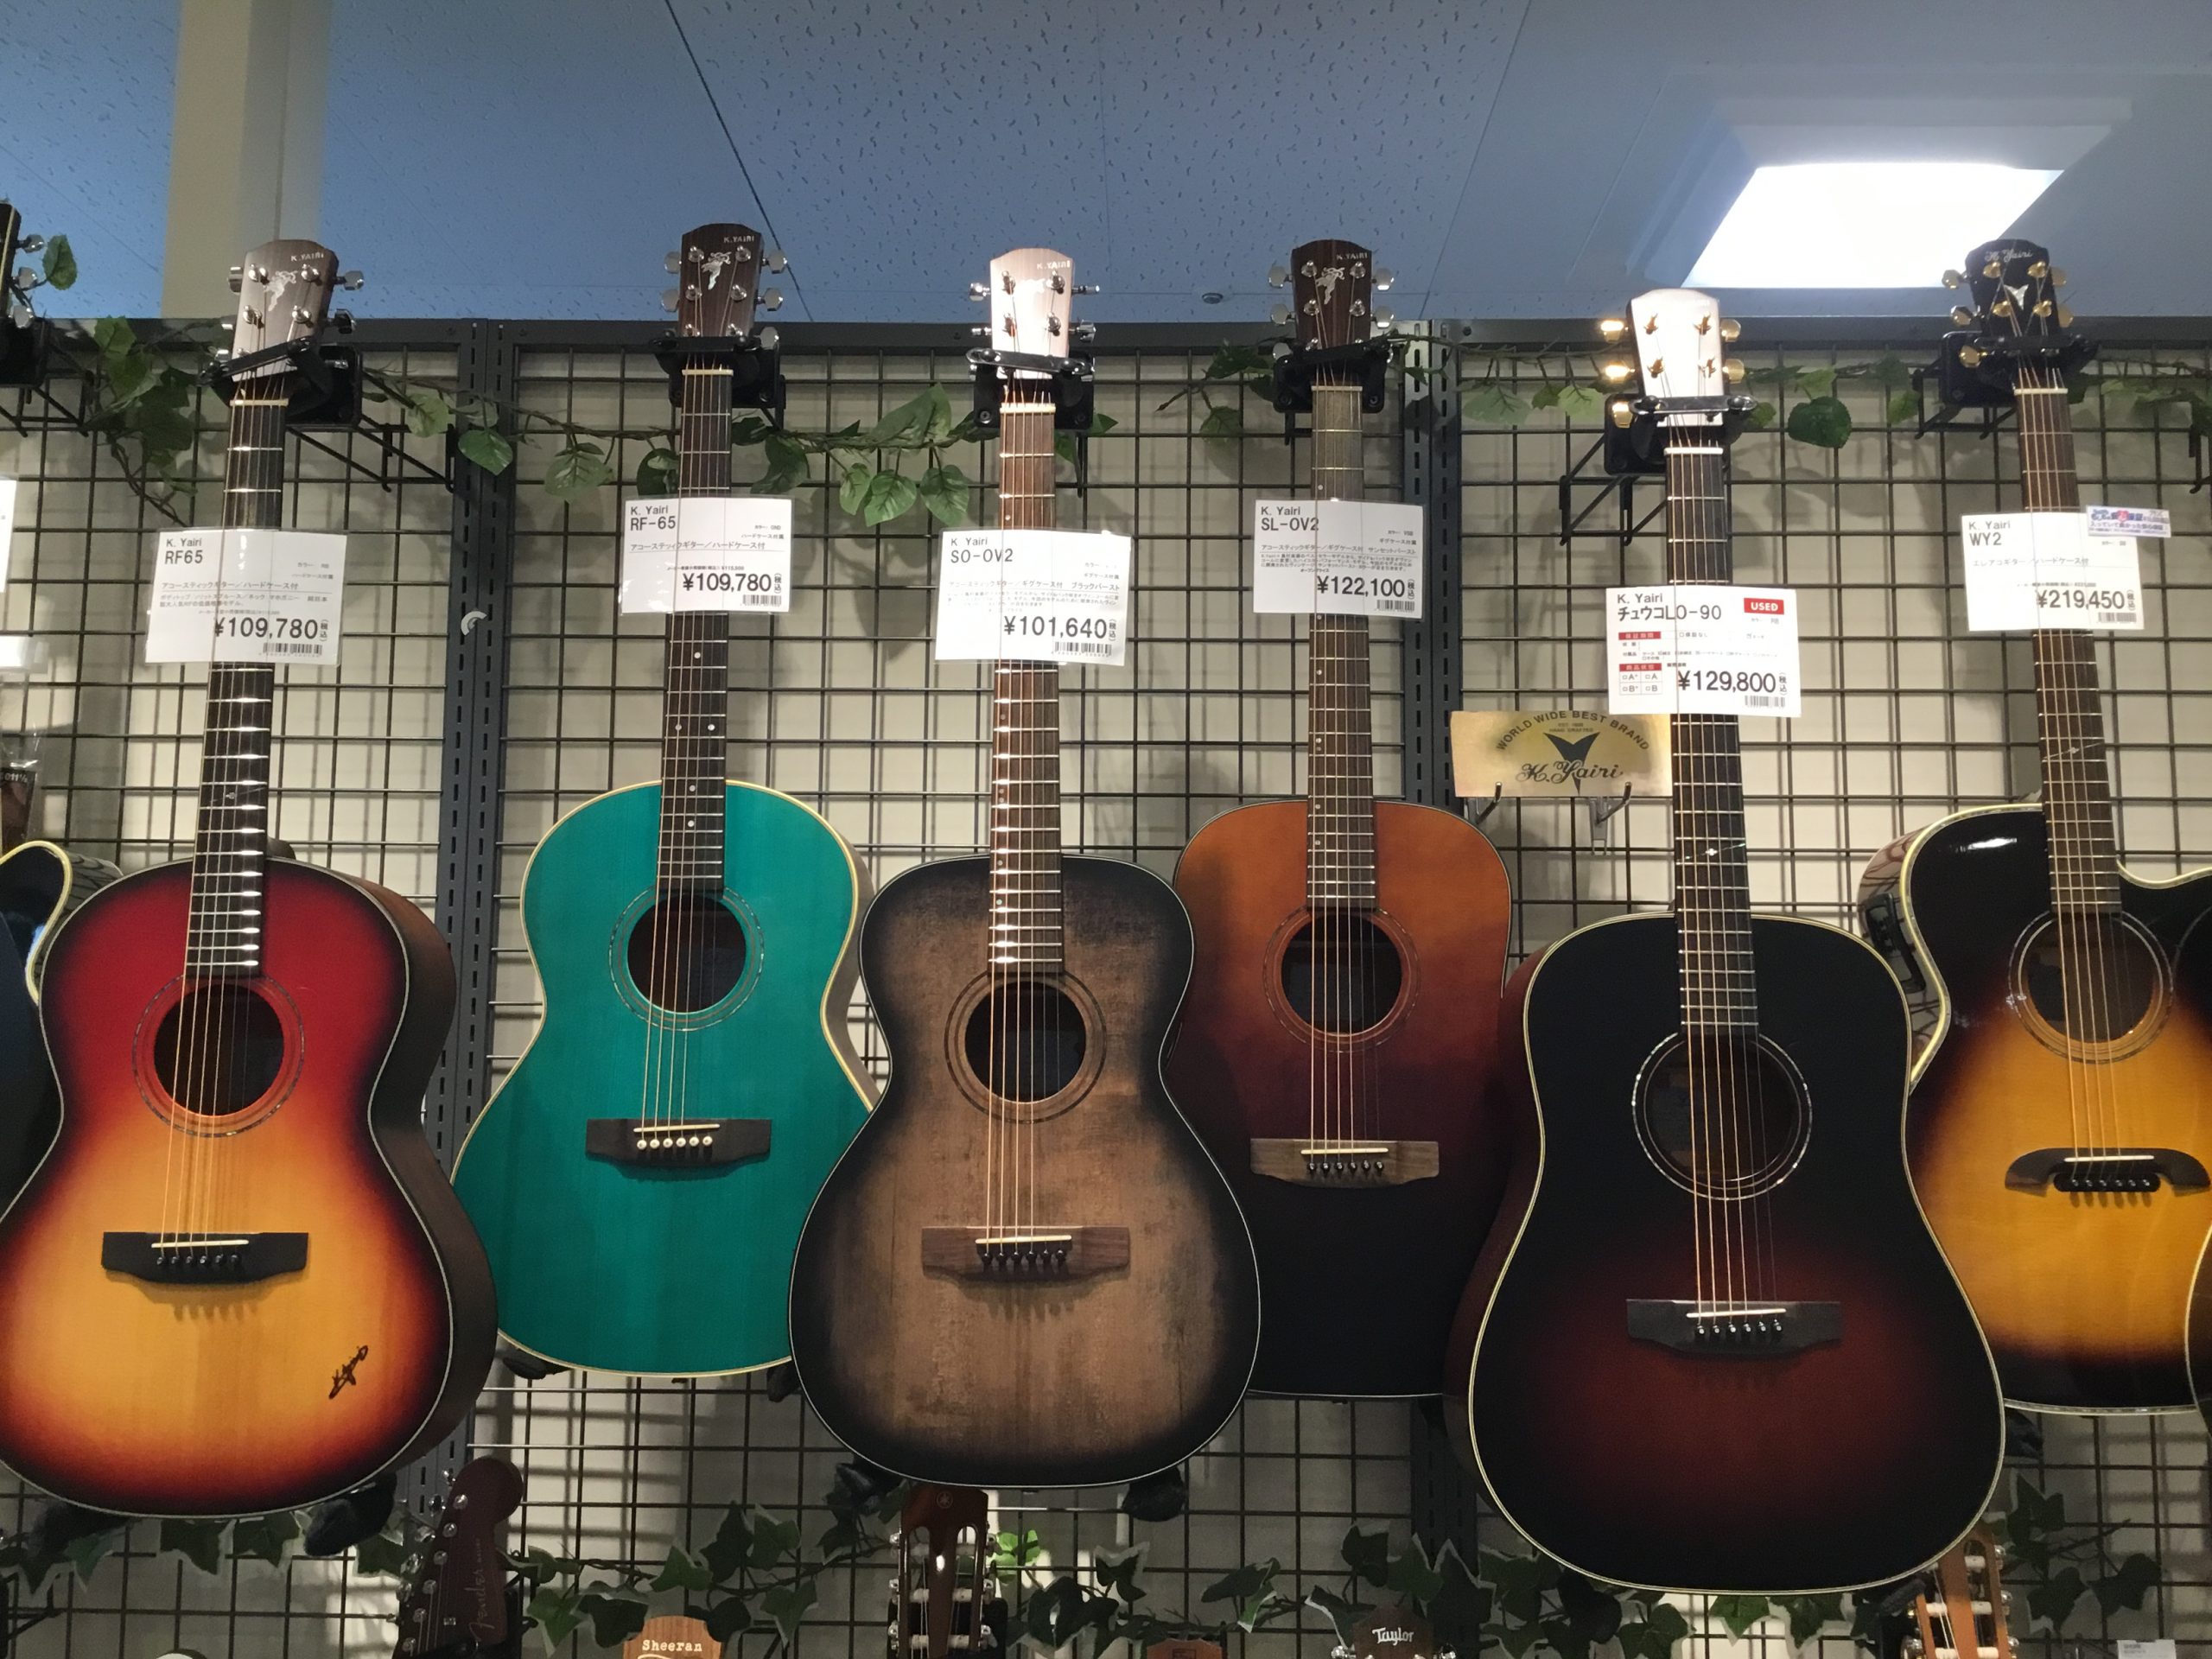 Made In Japanを代表する大人気ブランド「K.Yairi」が入荷致しました。 今回は6月6日時点での在庫商品をご紹介致します。 ※商品は販売済の場合もございます。ご了承ください。 *K.Yairiについて(メーカーHPより抜粋) ヤイリギターの歴史は1935年、創業者の矢入儀市が木製楽器製 […]